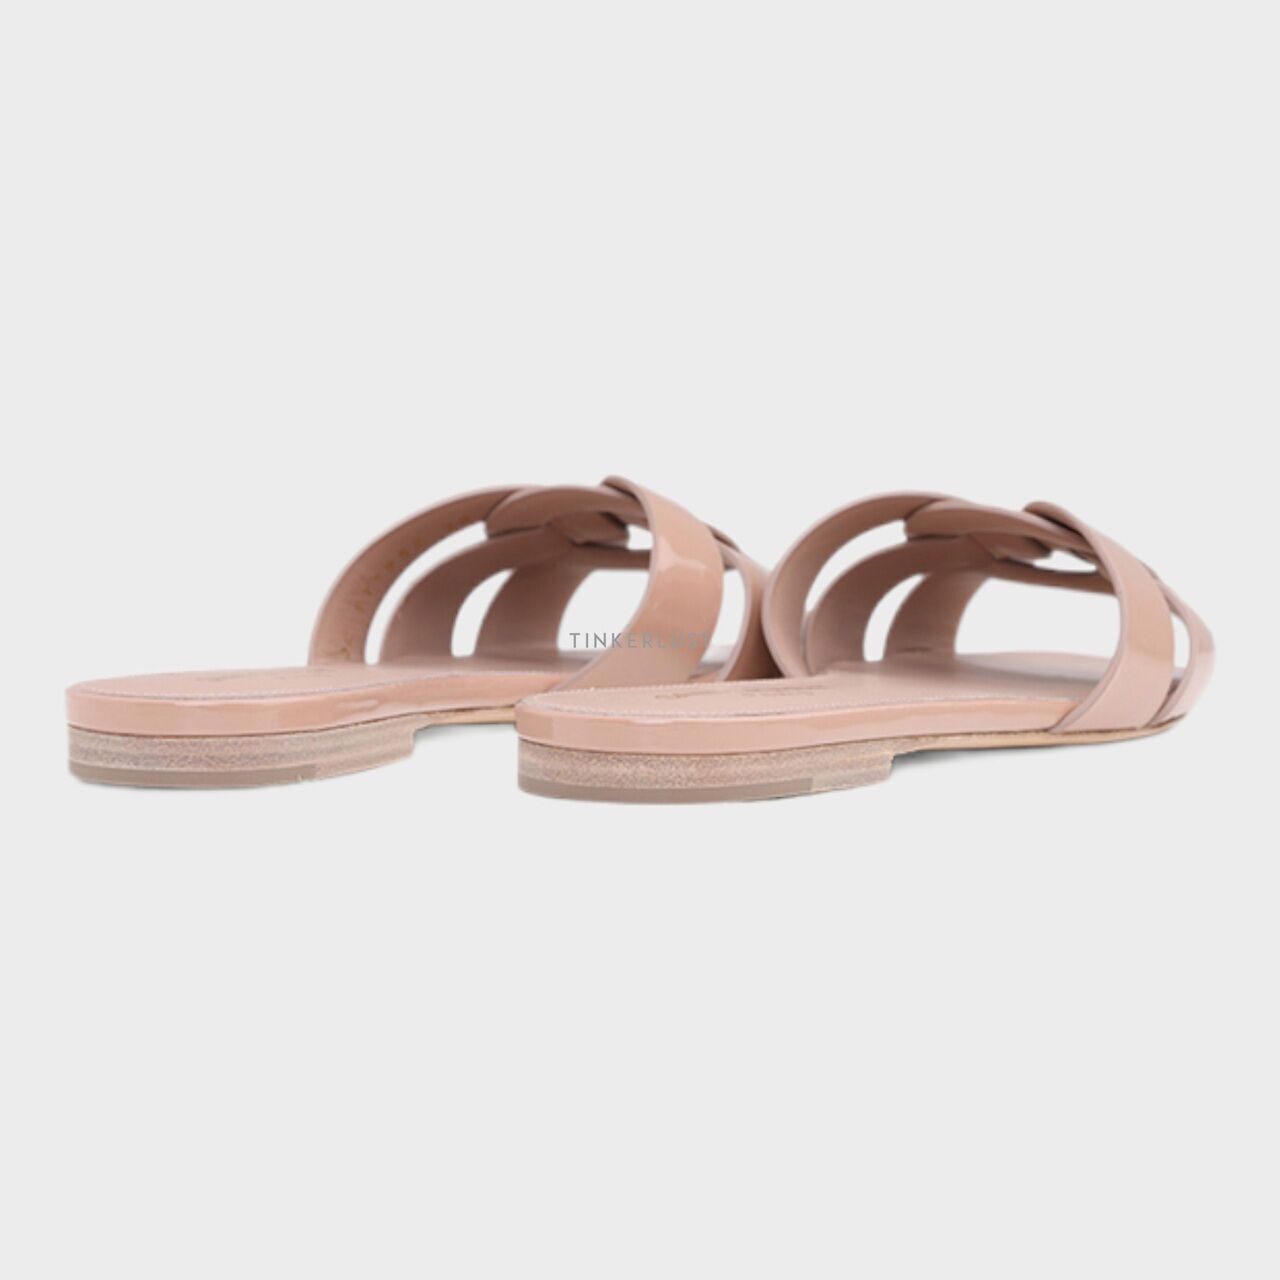 Saint Laurent Nu Pieds Tribute Slippers Nude Poudre Patent Leather Sandals